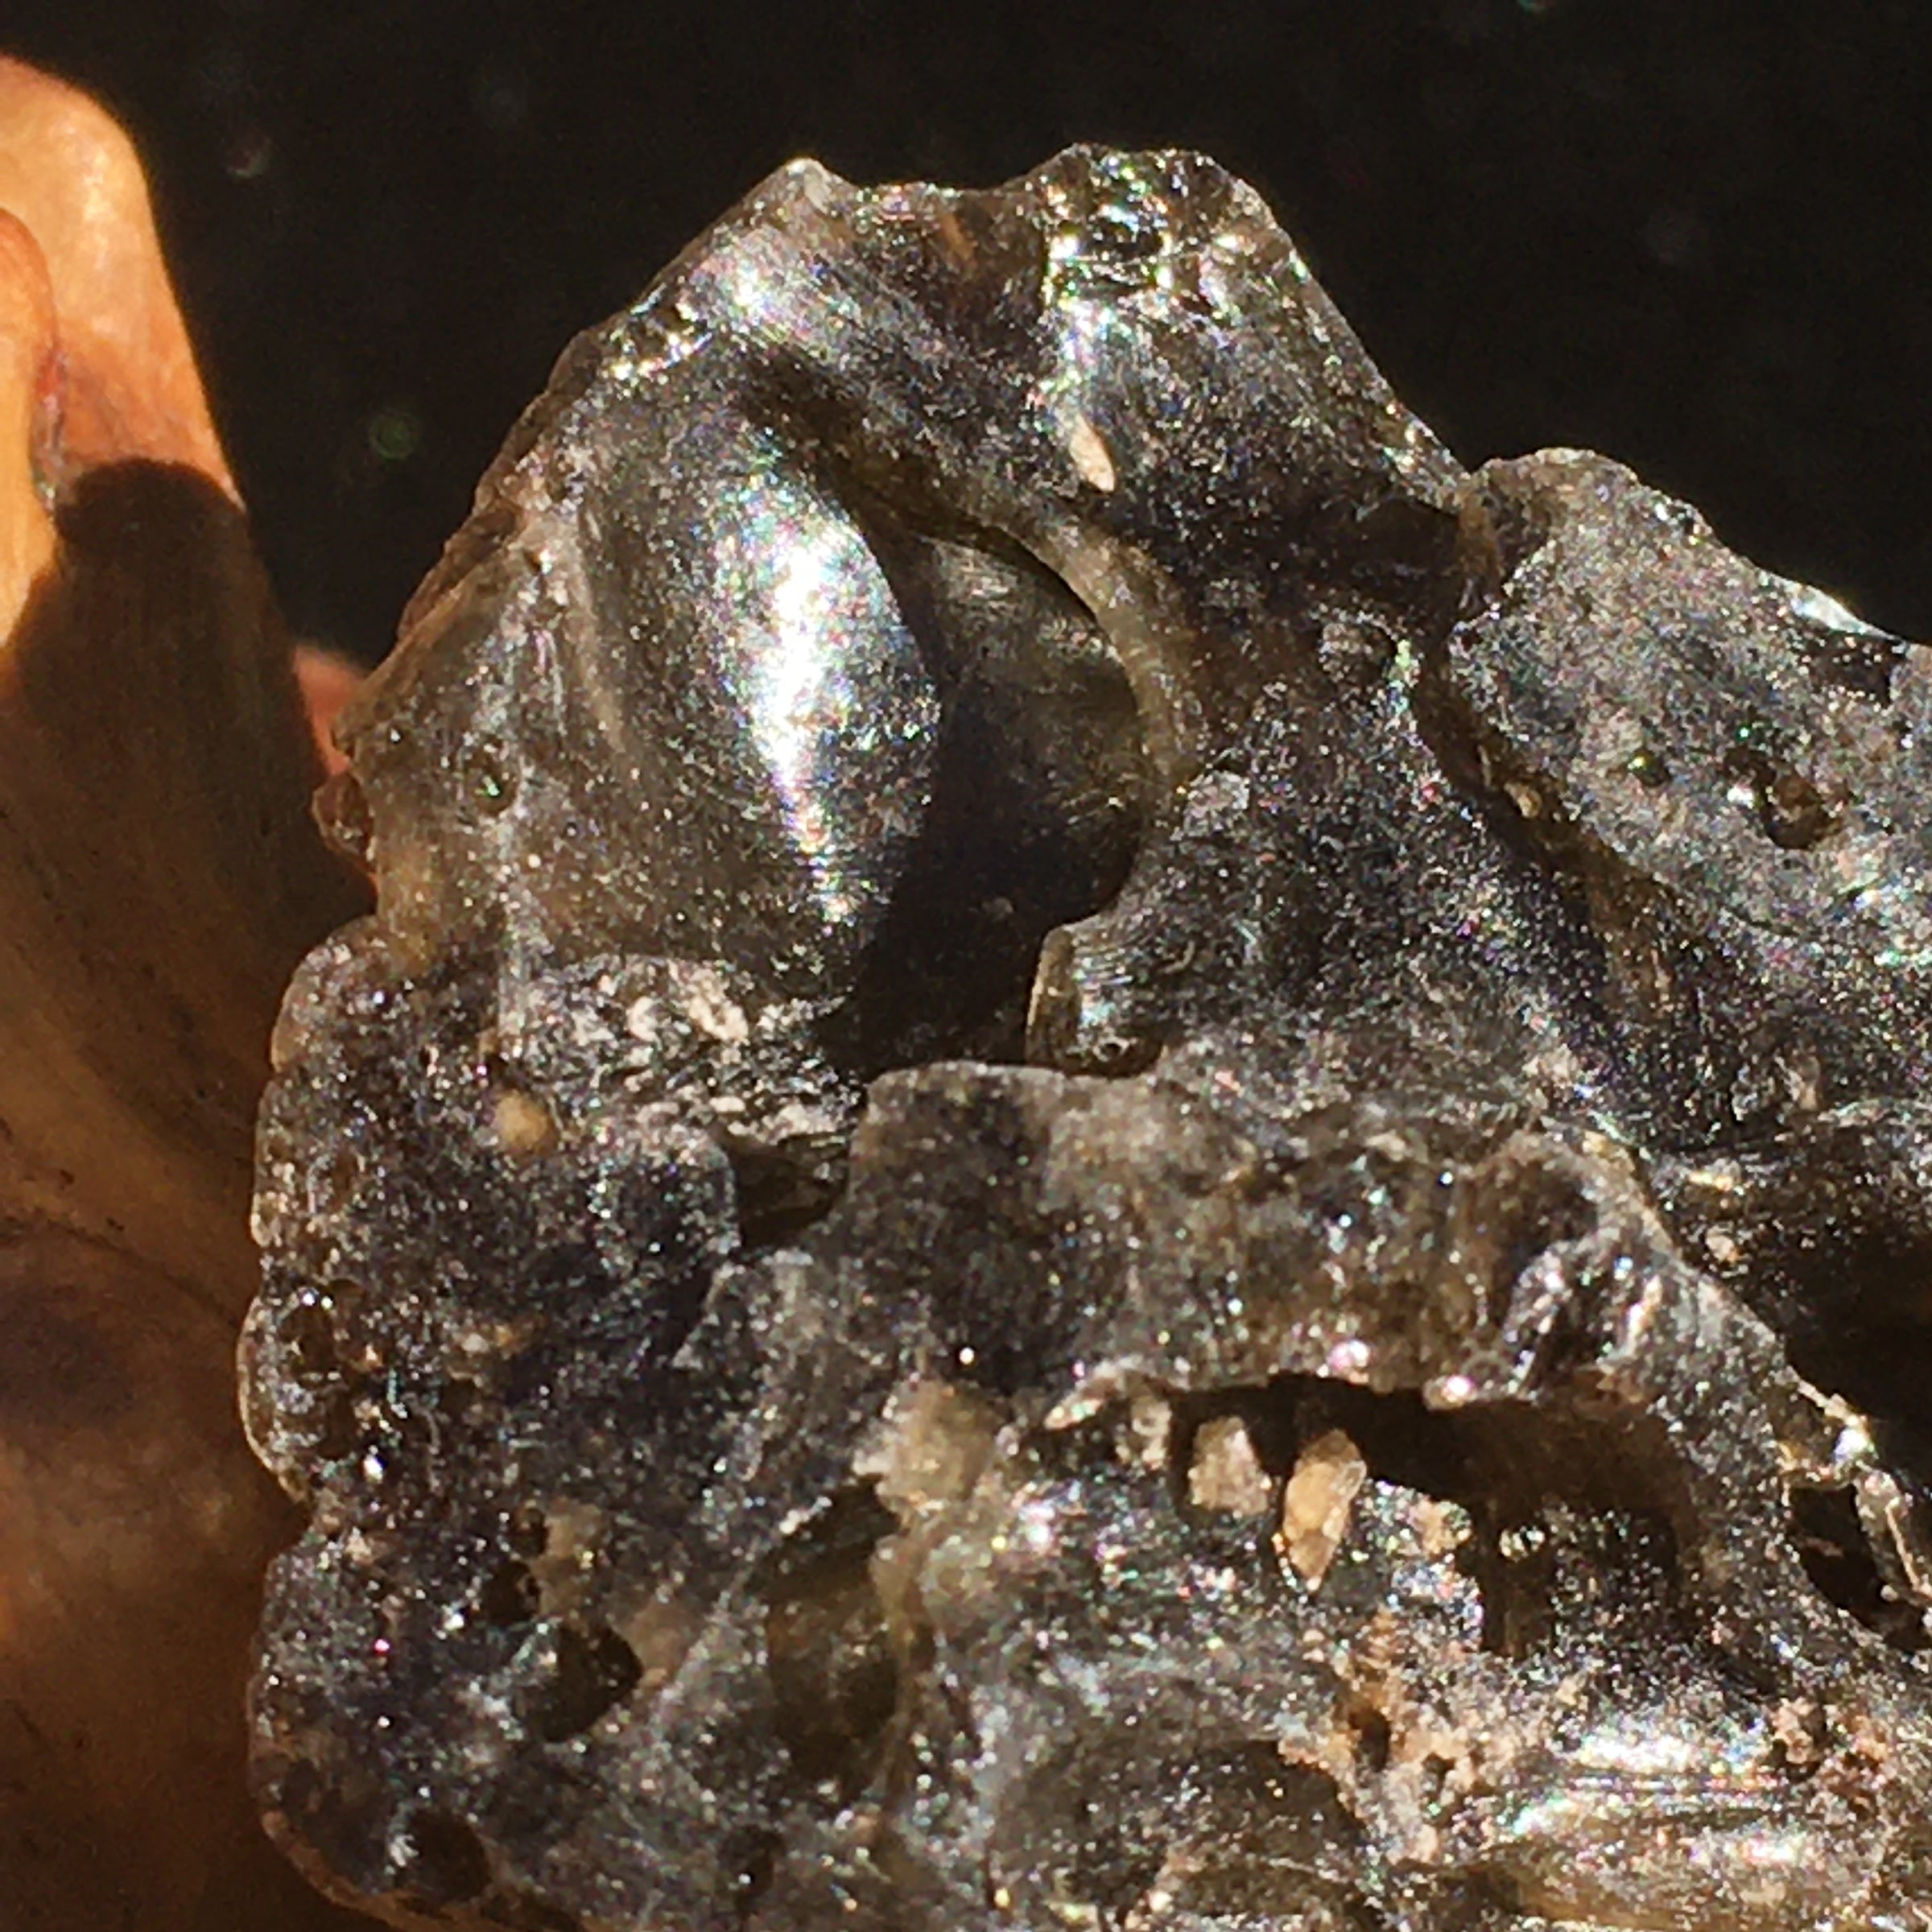 Darwinite Darwin Glass Tektite 8.2 grams-Moldavite Life